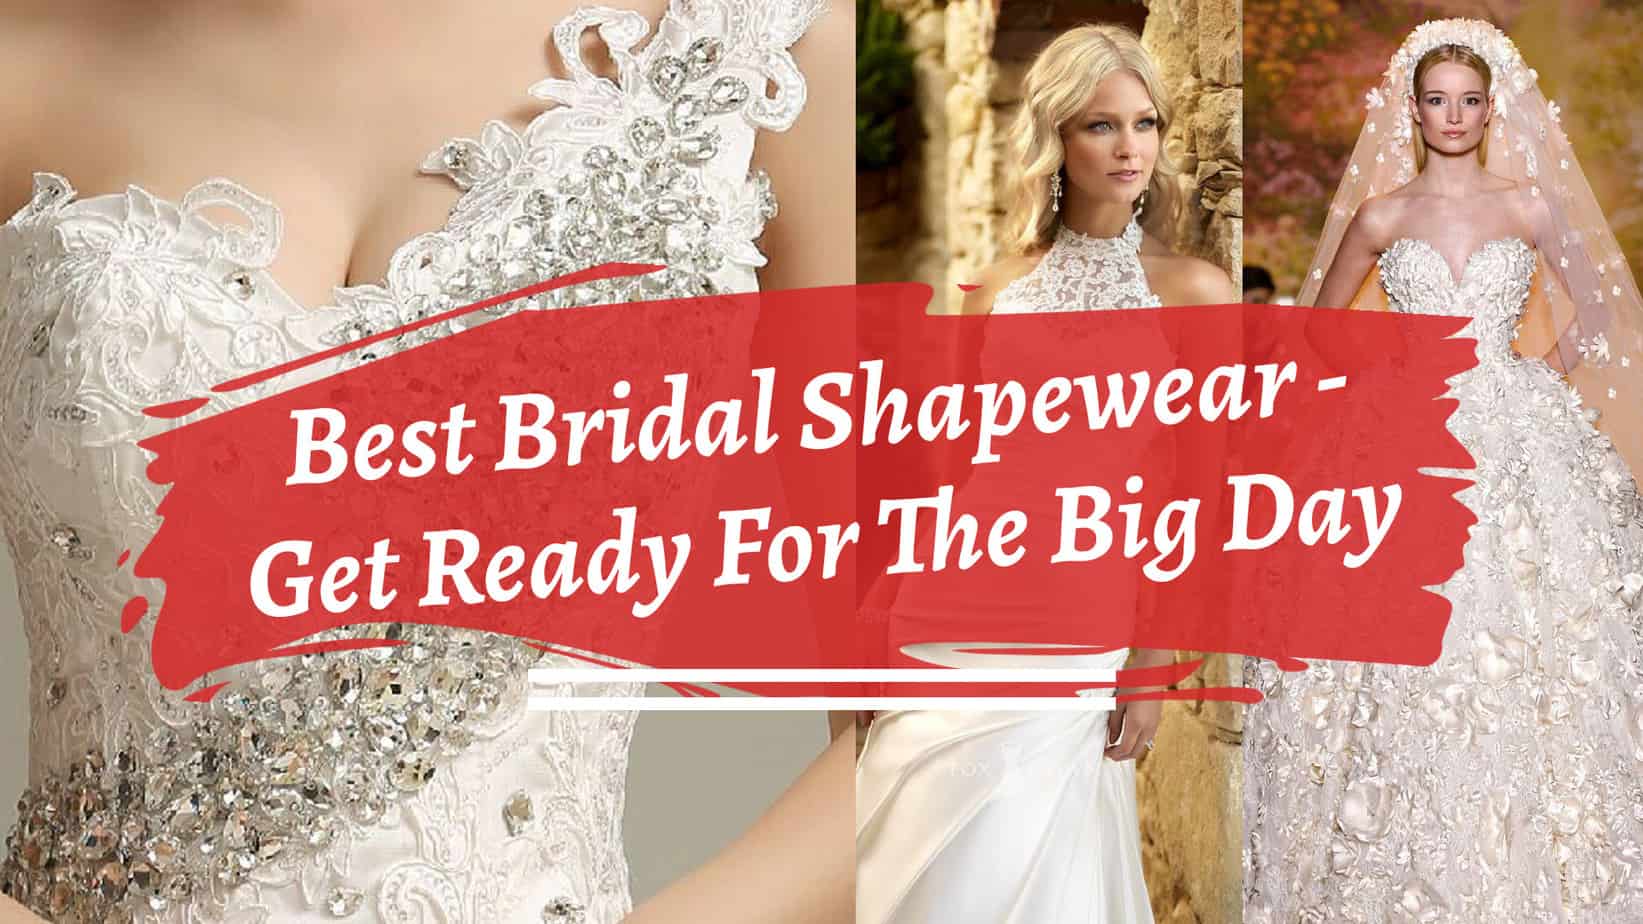 Bridal shapewear